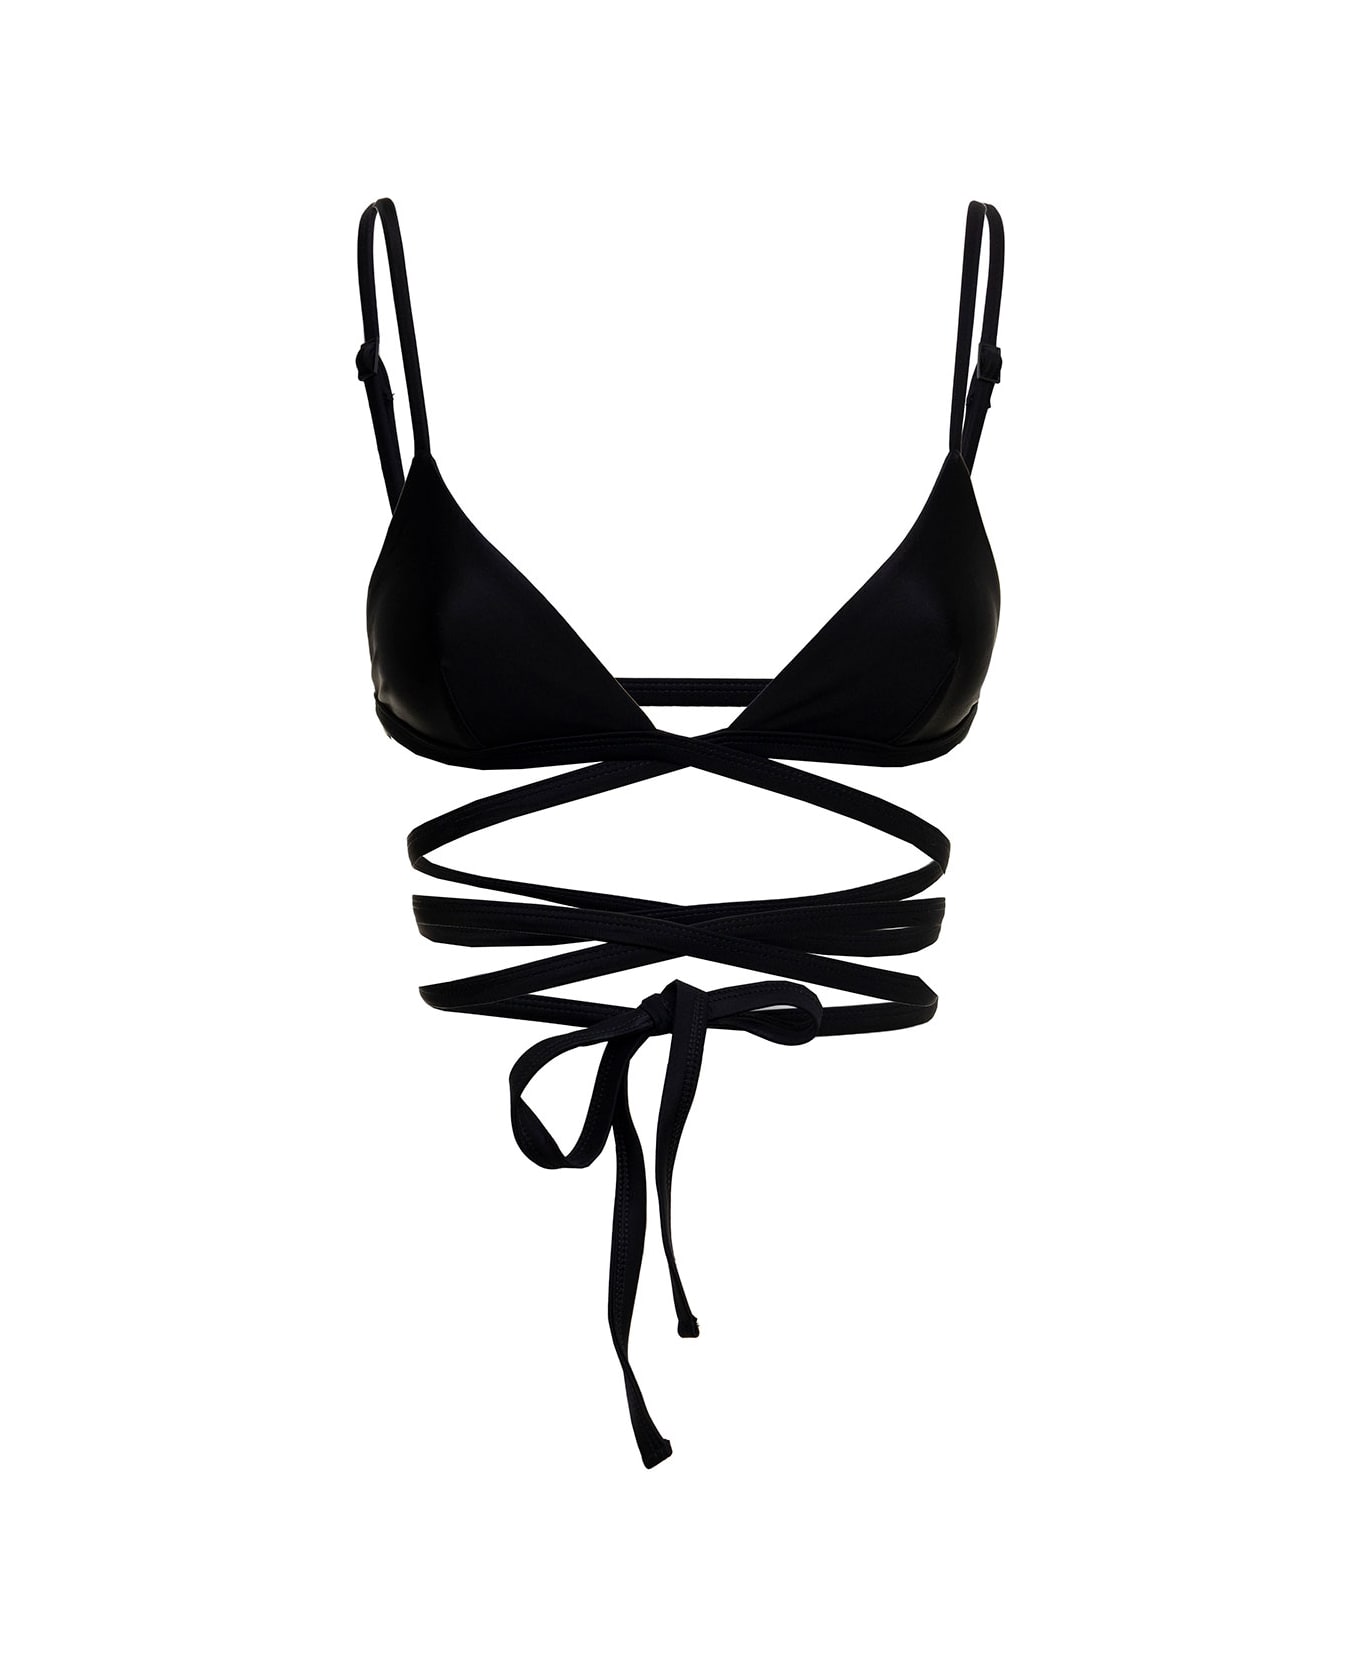 MATTEAU Woman's Black Nylon Bikini Top With Crossed Laces - Black 水着